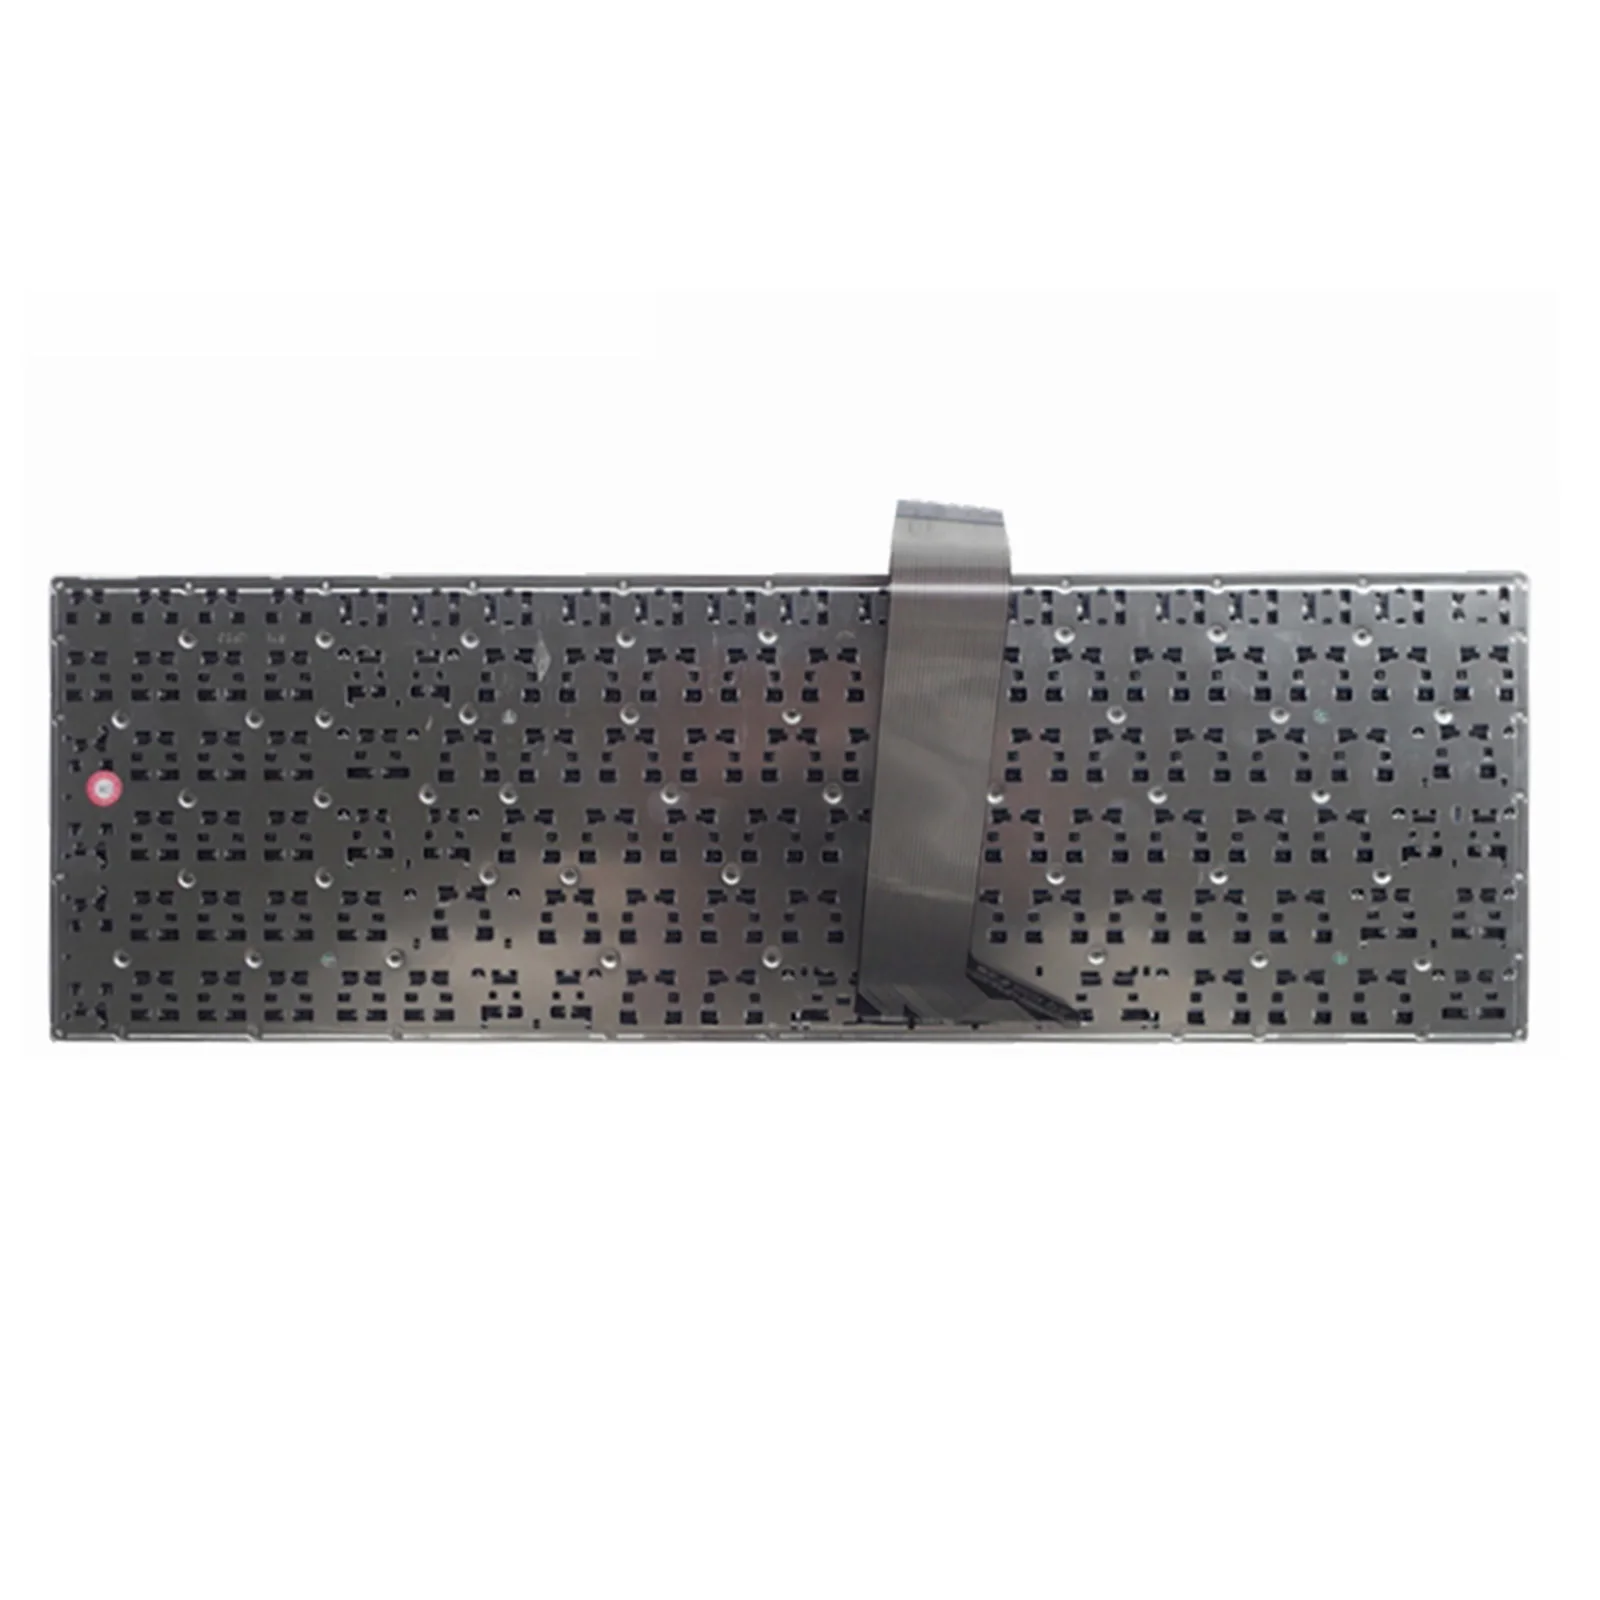 New Full Keyboard US English Layout Keypad Notebook Repair Accessory for ASUS K55A K55VD K55VM A55VD R700V X501 A56